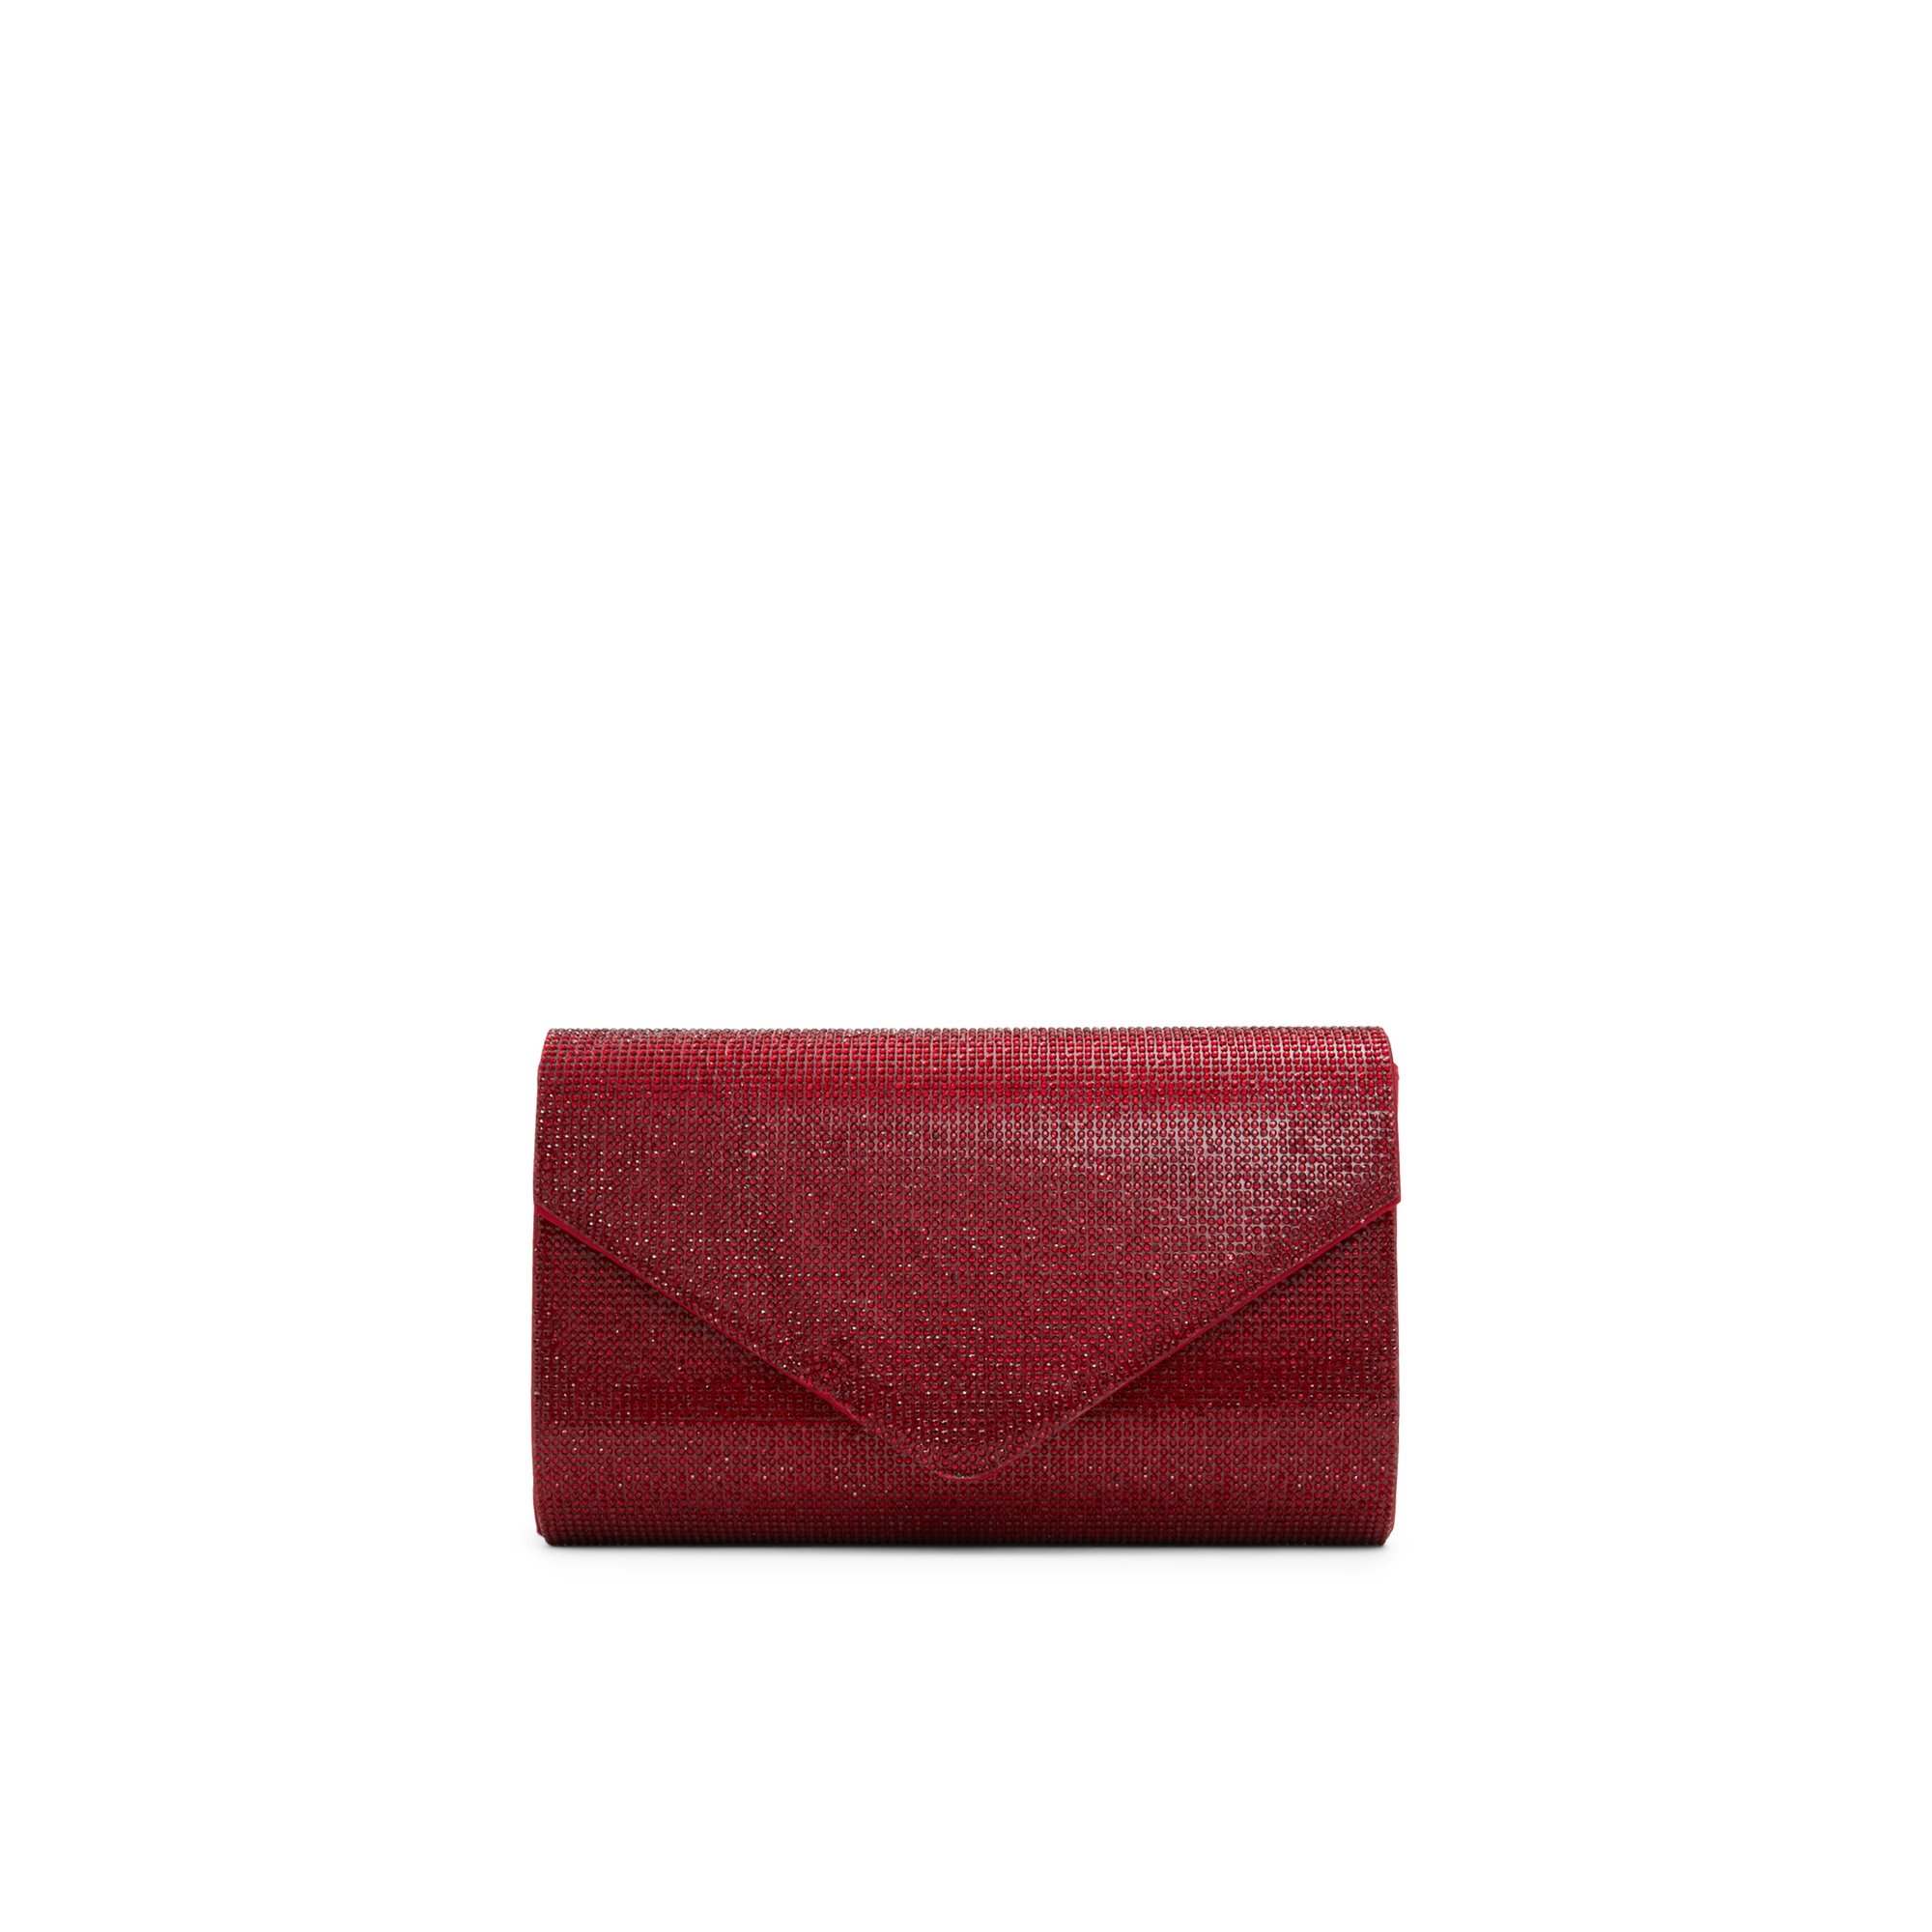 ALDO Geaven - Women's Clutches & Evening Bag Handbag - Red